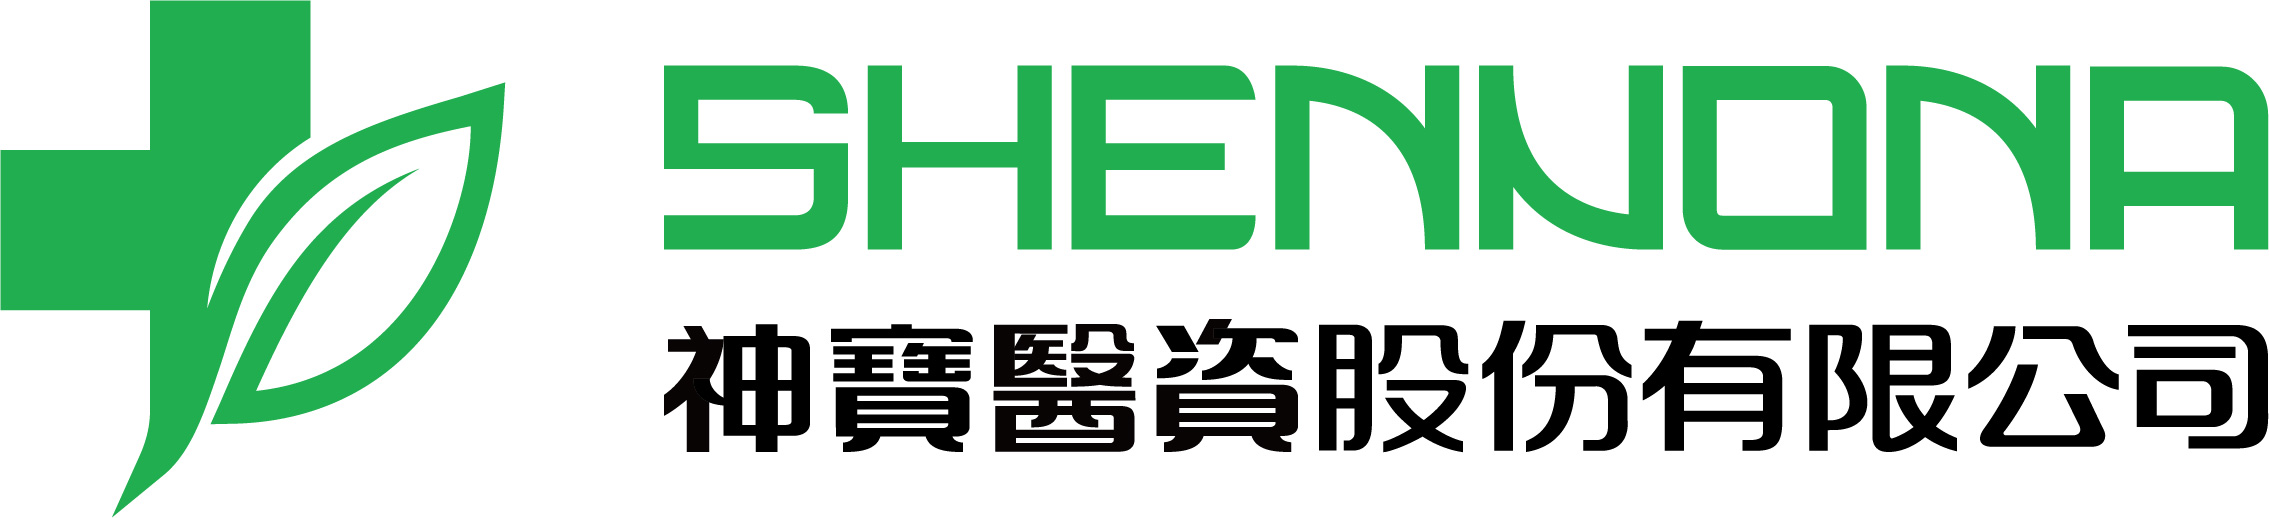 SHENNONA Co., Ltd.-Logo